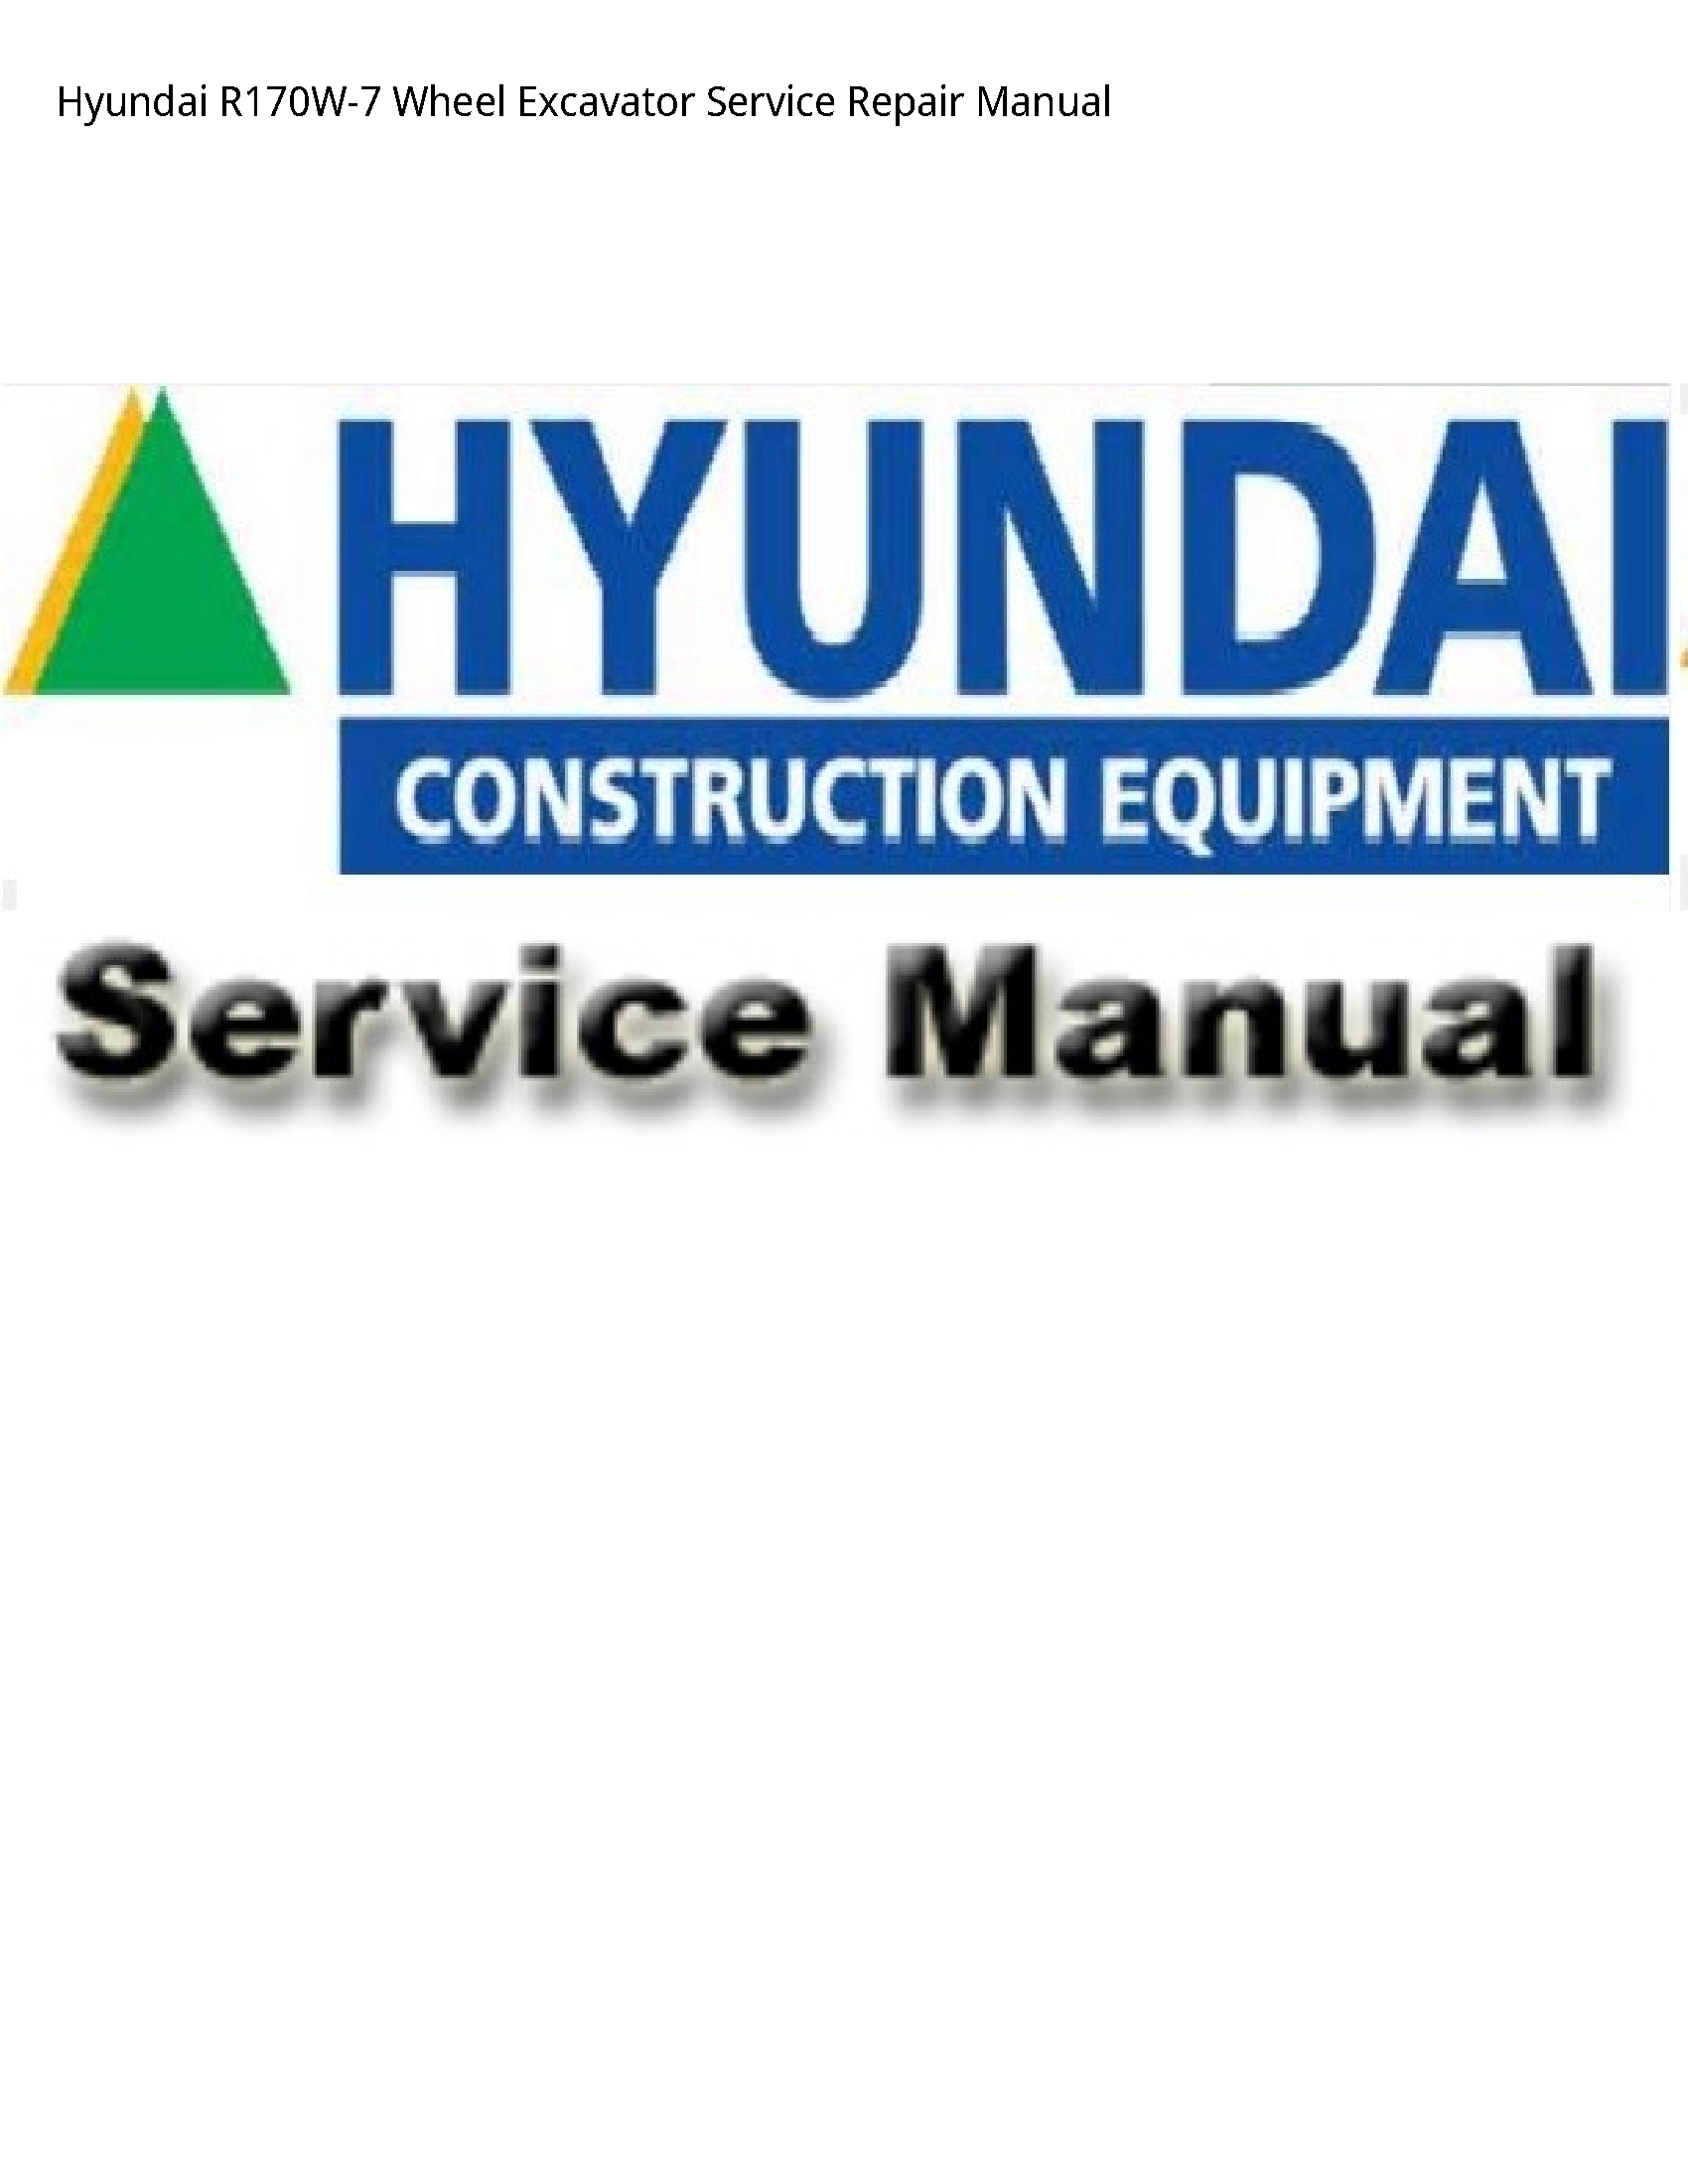 Hyundai R170W-7 Wheel Excavator manual